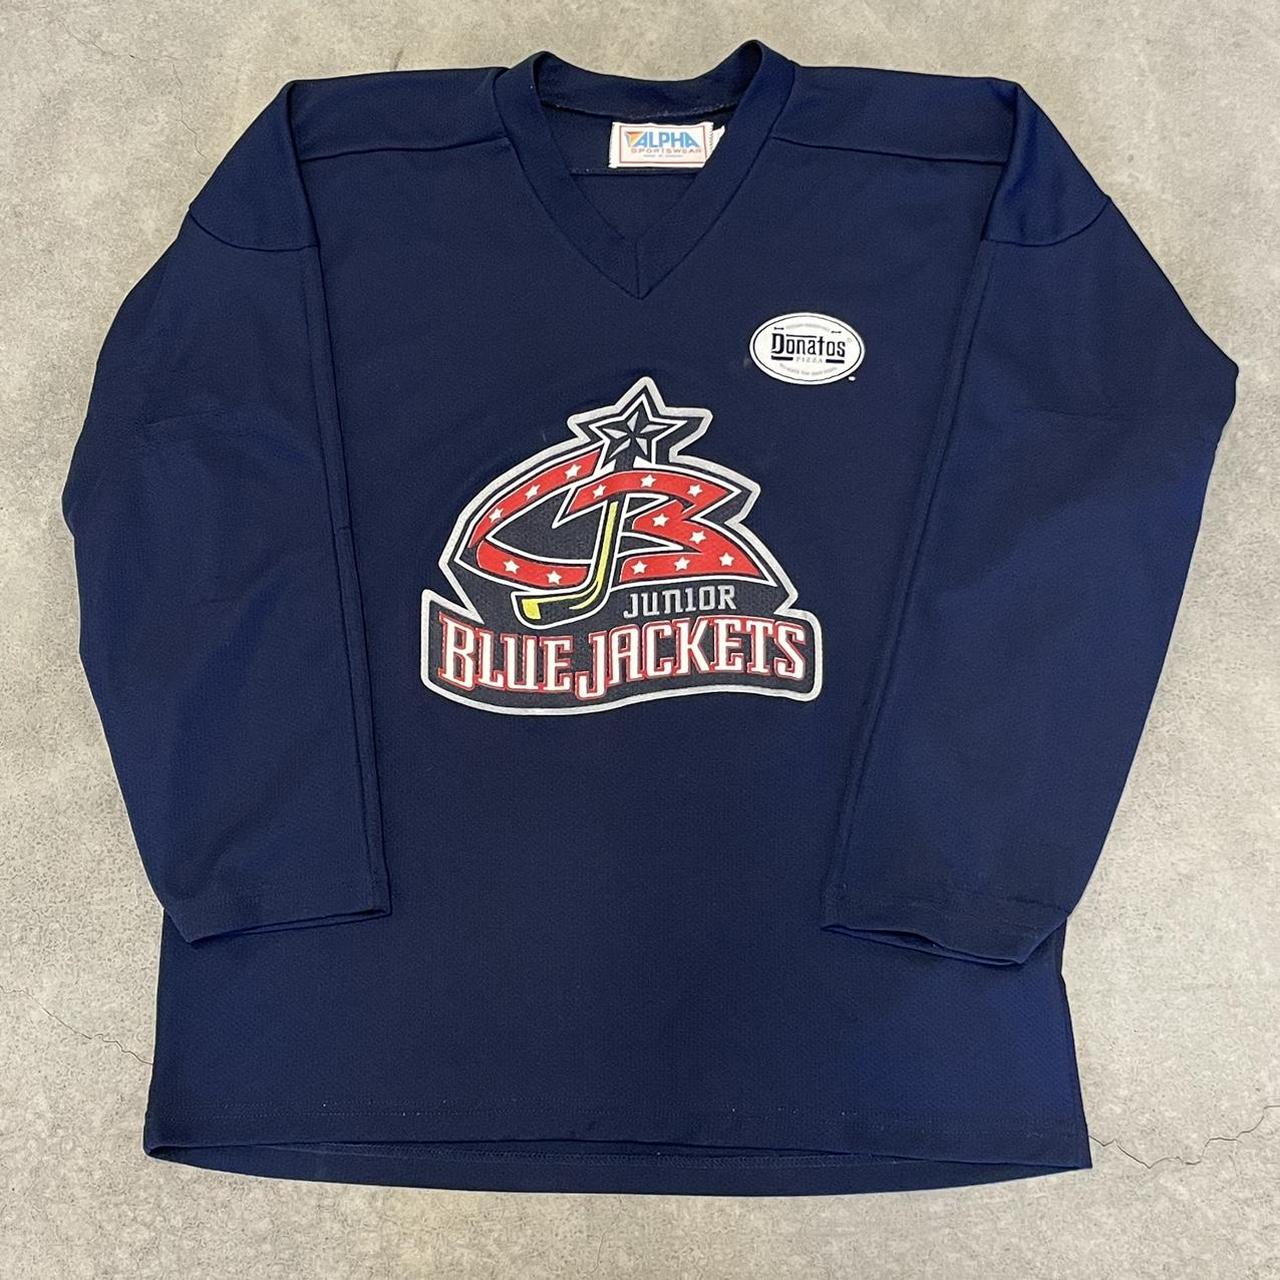 Vintage Columbus Blue Jackets NHL Hockey Crewneck Sweatshirt 